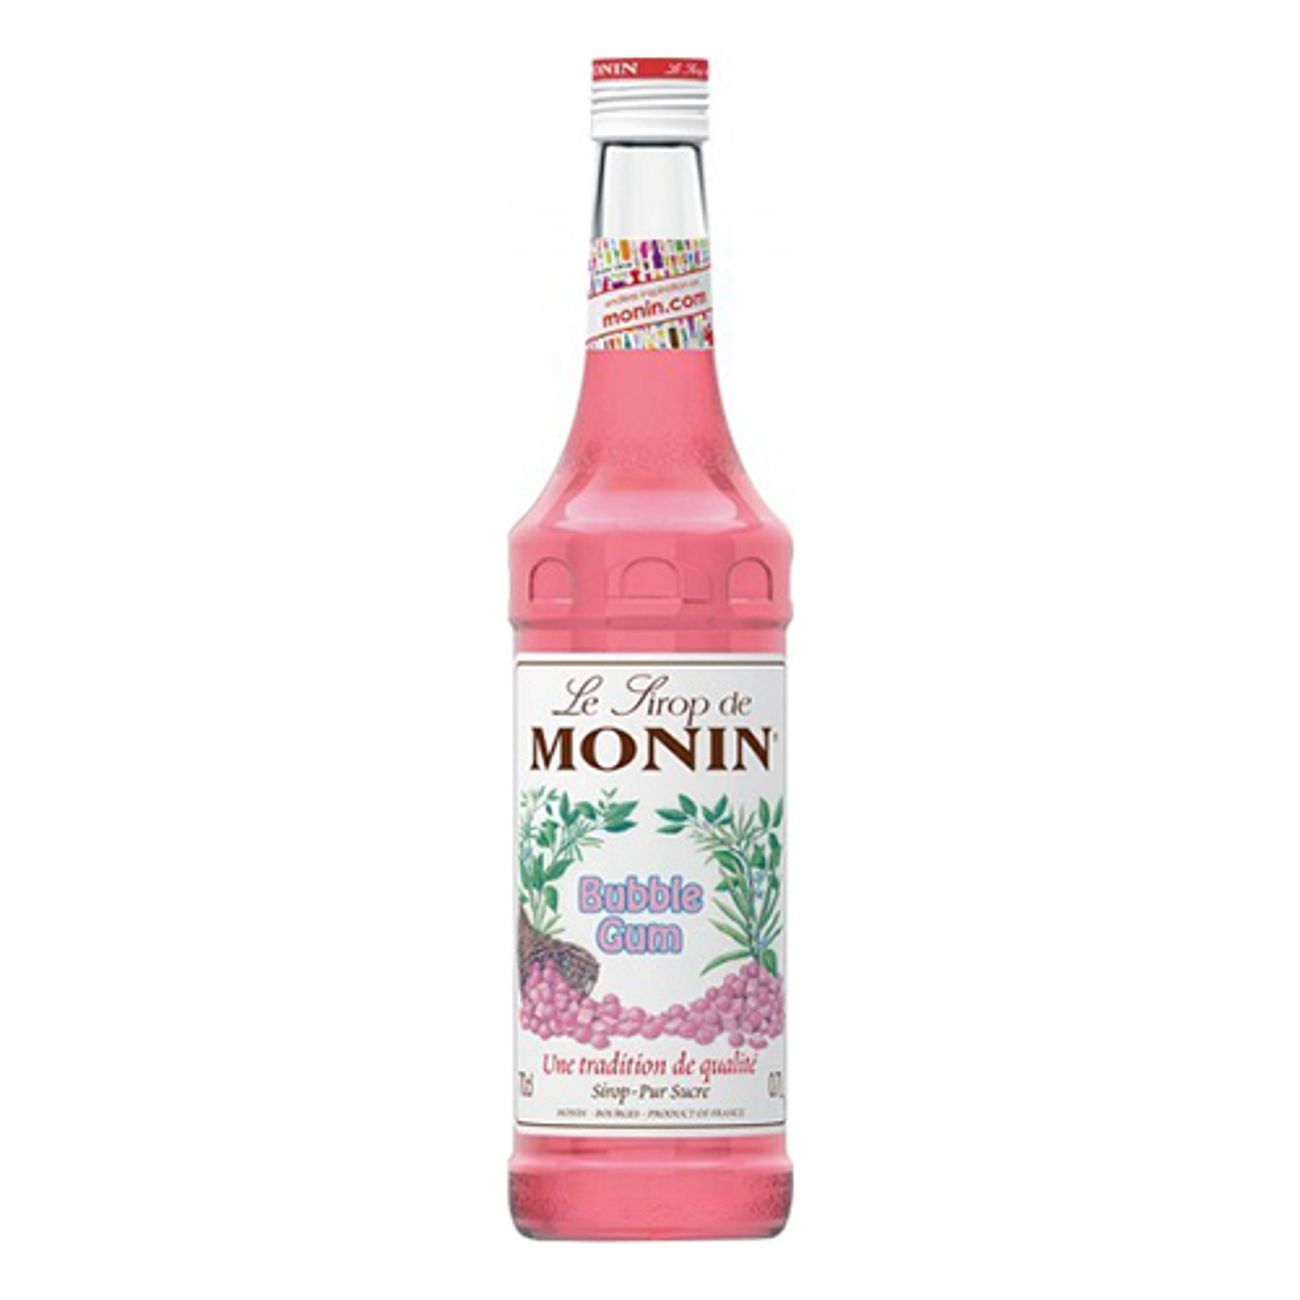 monin-tuggummi-drinkmix-1